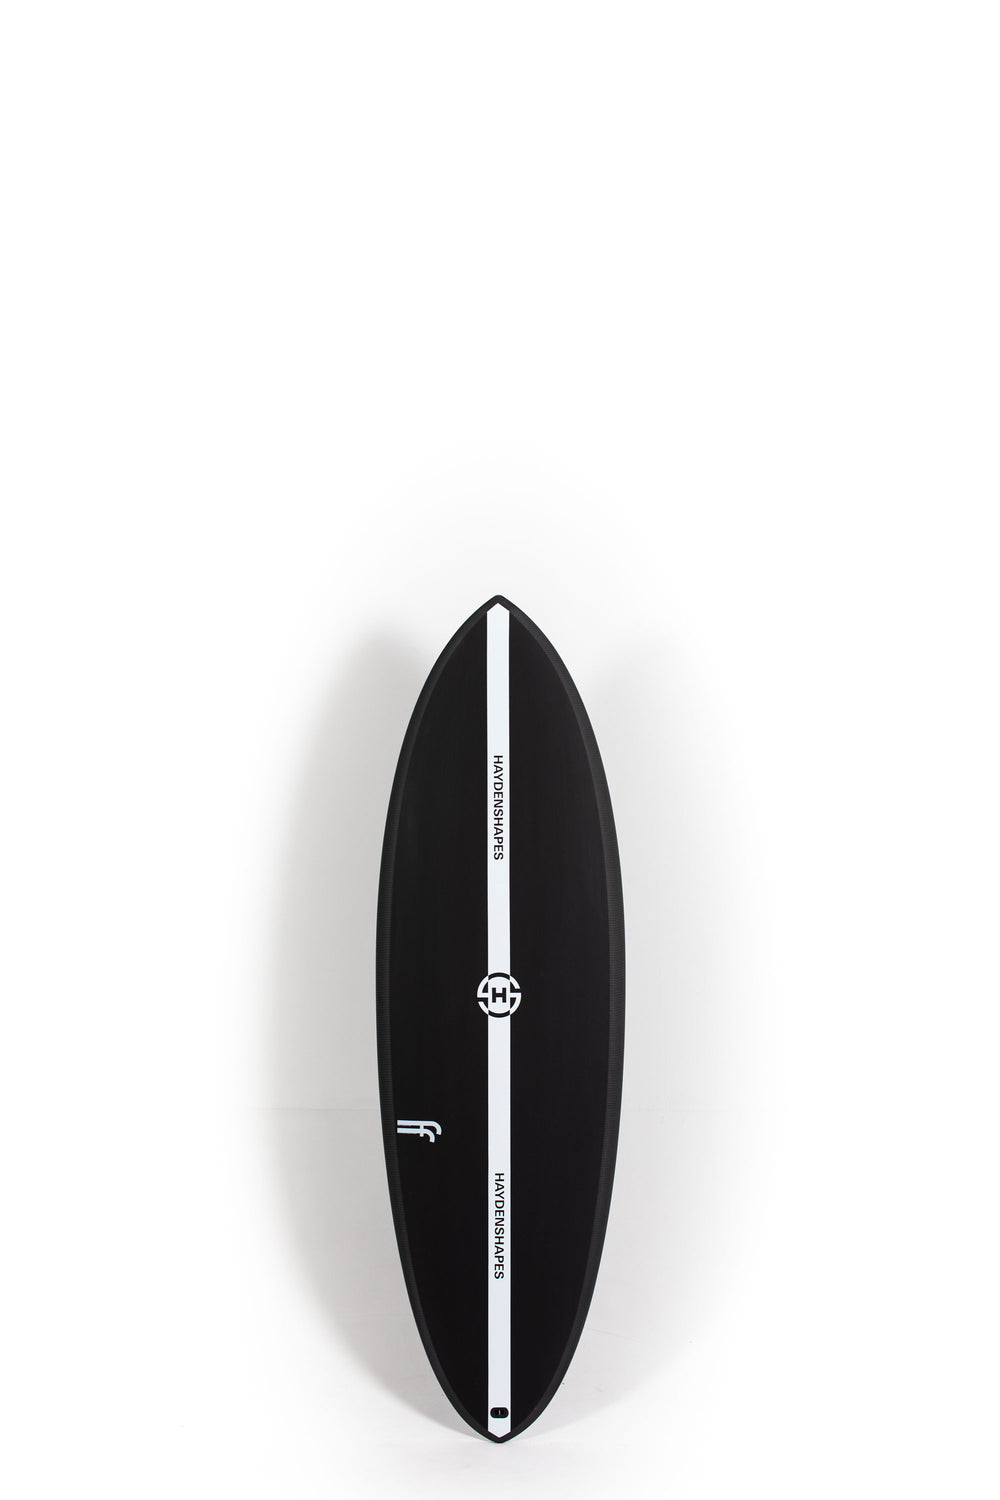 Pukas Surf Shop - HAYDEN SHAPES SURFBOARDS - HYPTO KRIPTO 5'7